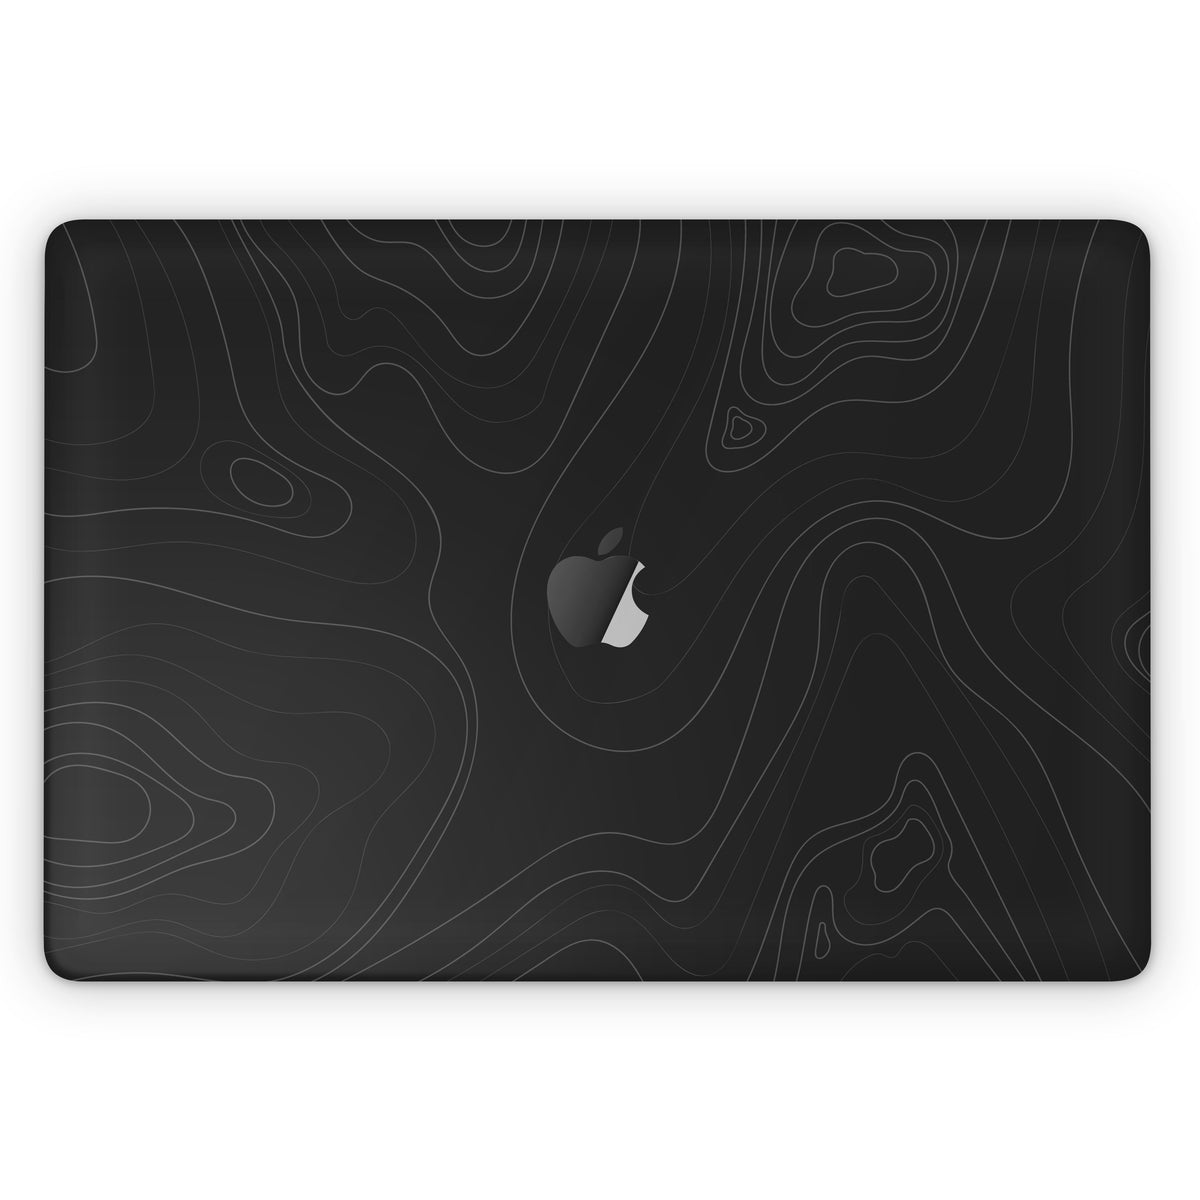 Switchback (MacBook Skin)